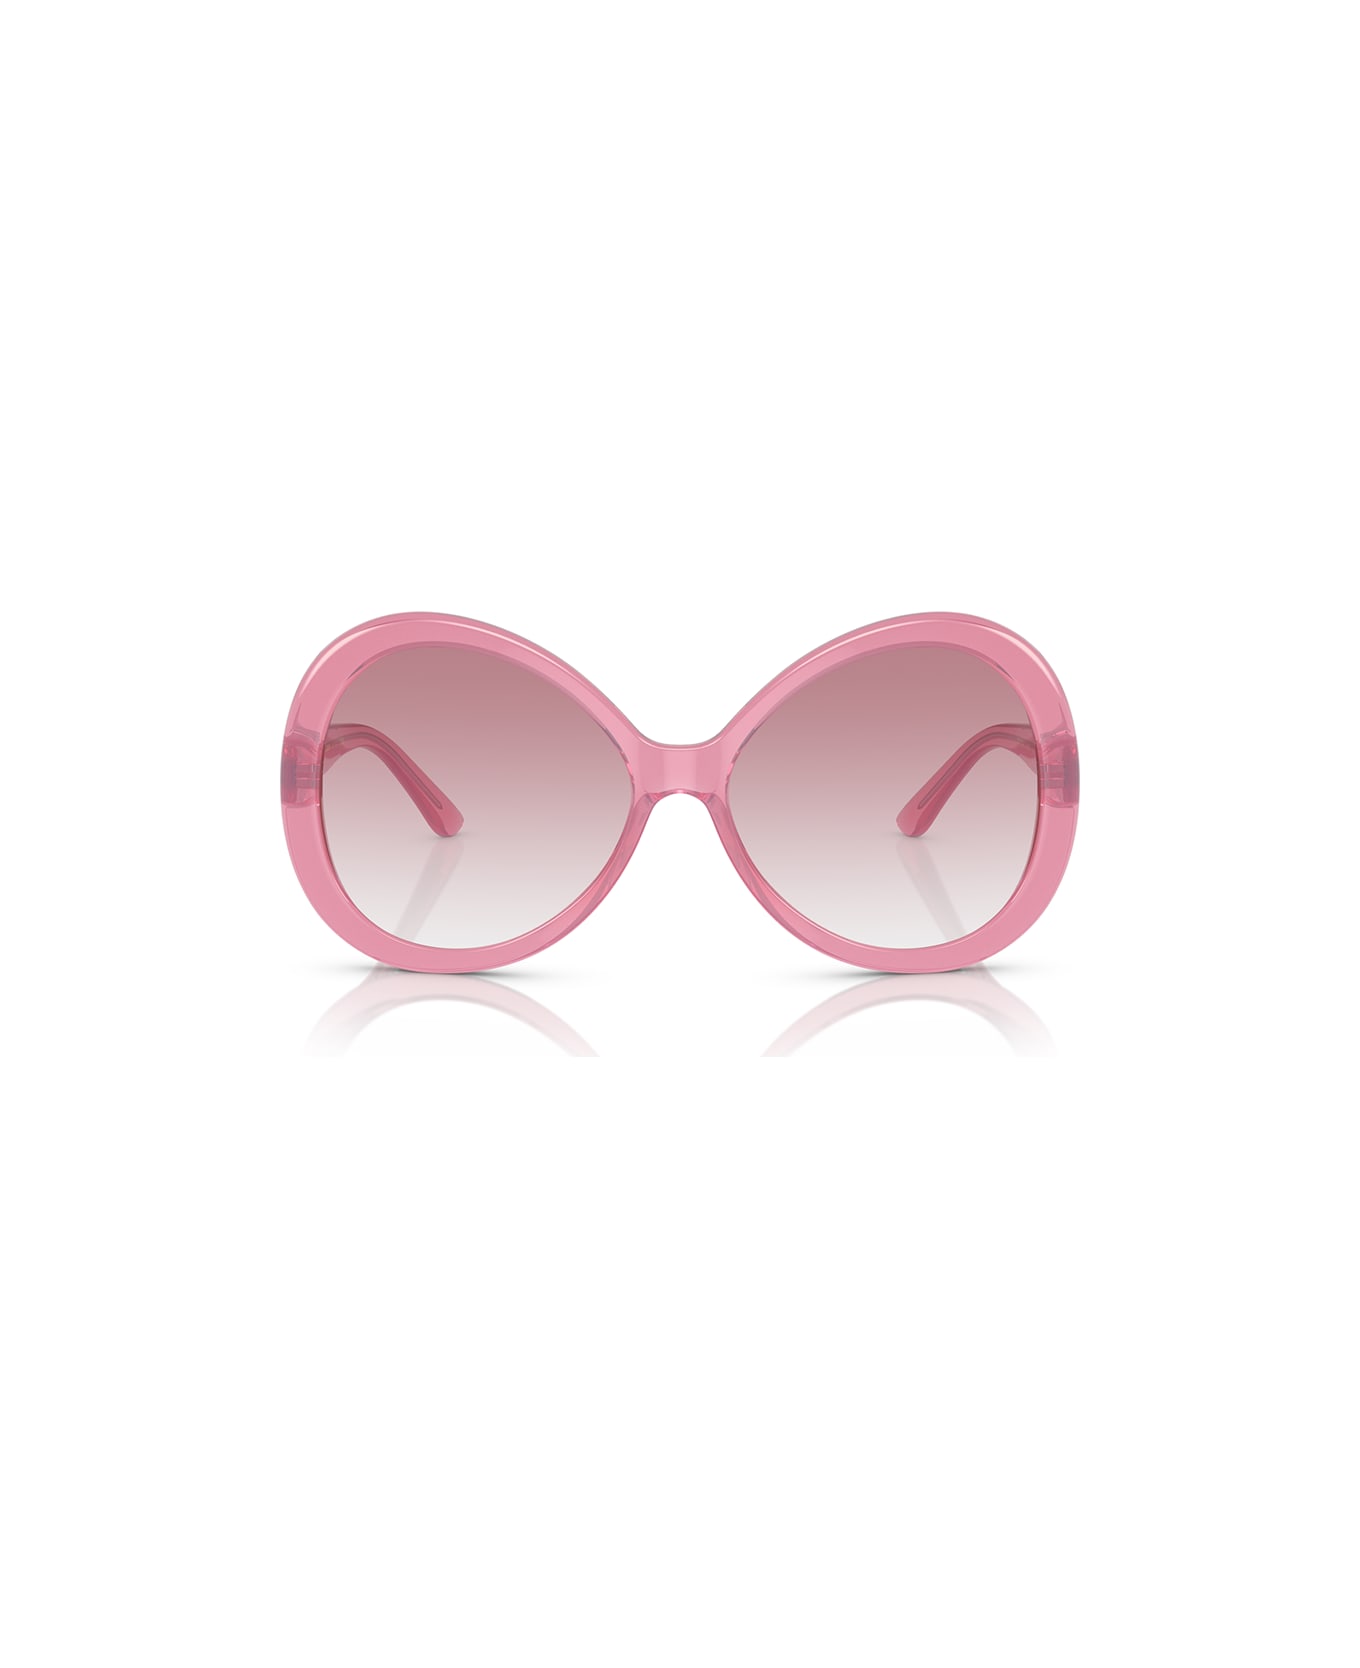 Dolce & Gabbana Eyewear Sunglasses - Rosa/Rosa sfumato サングラス